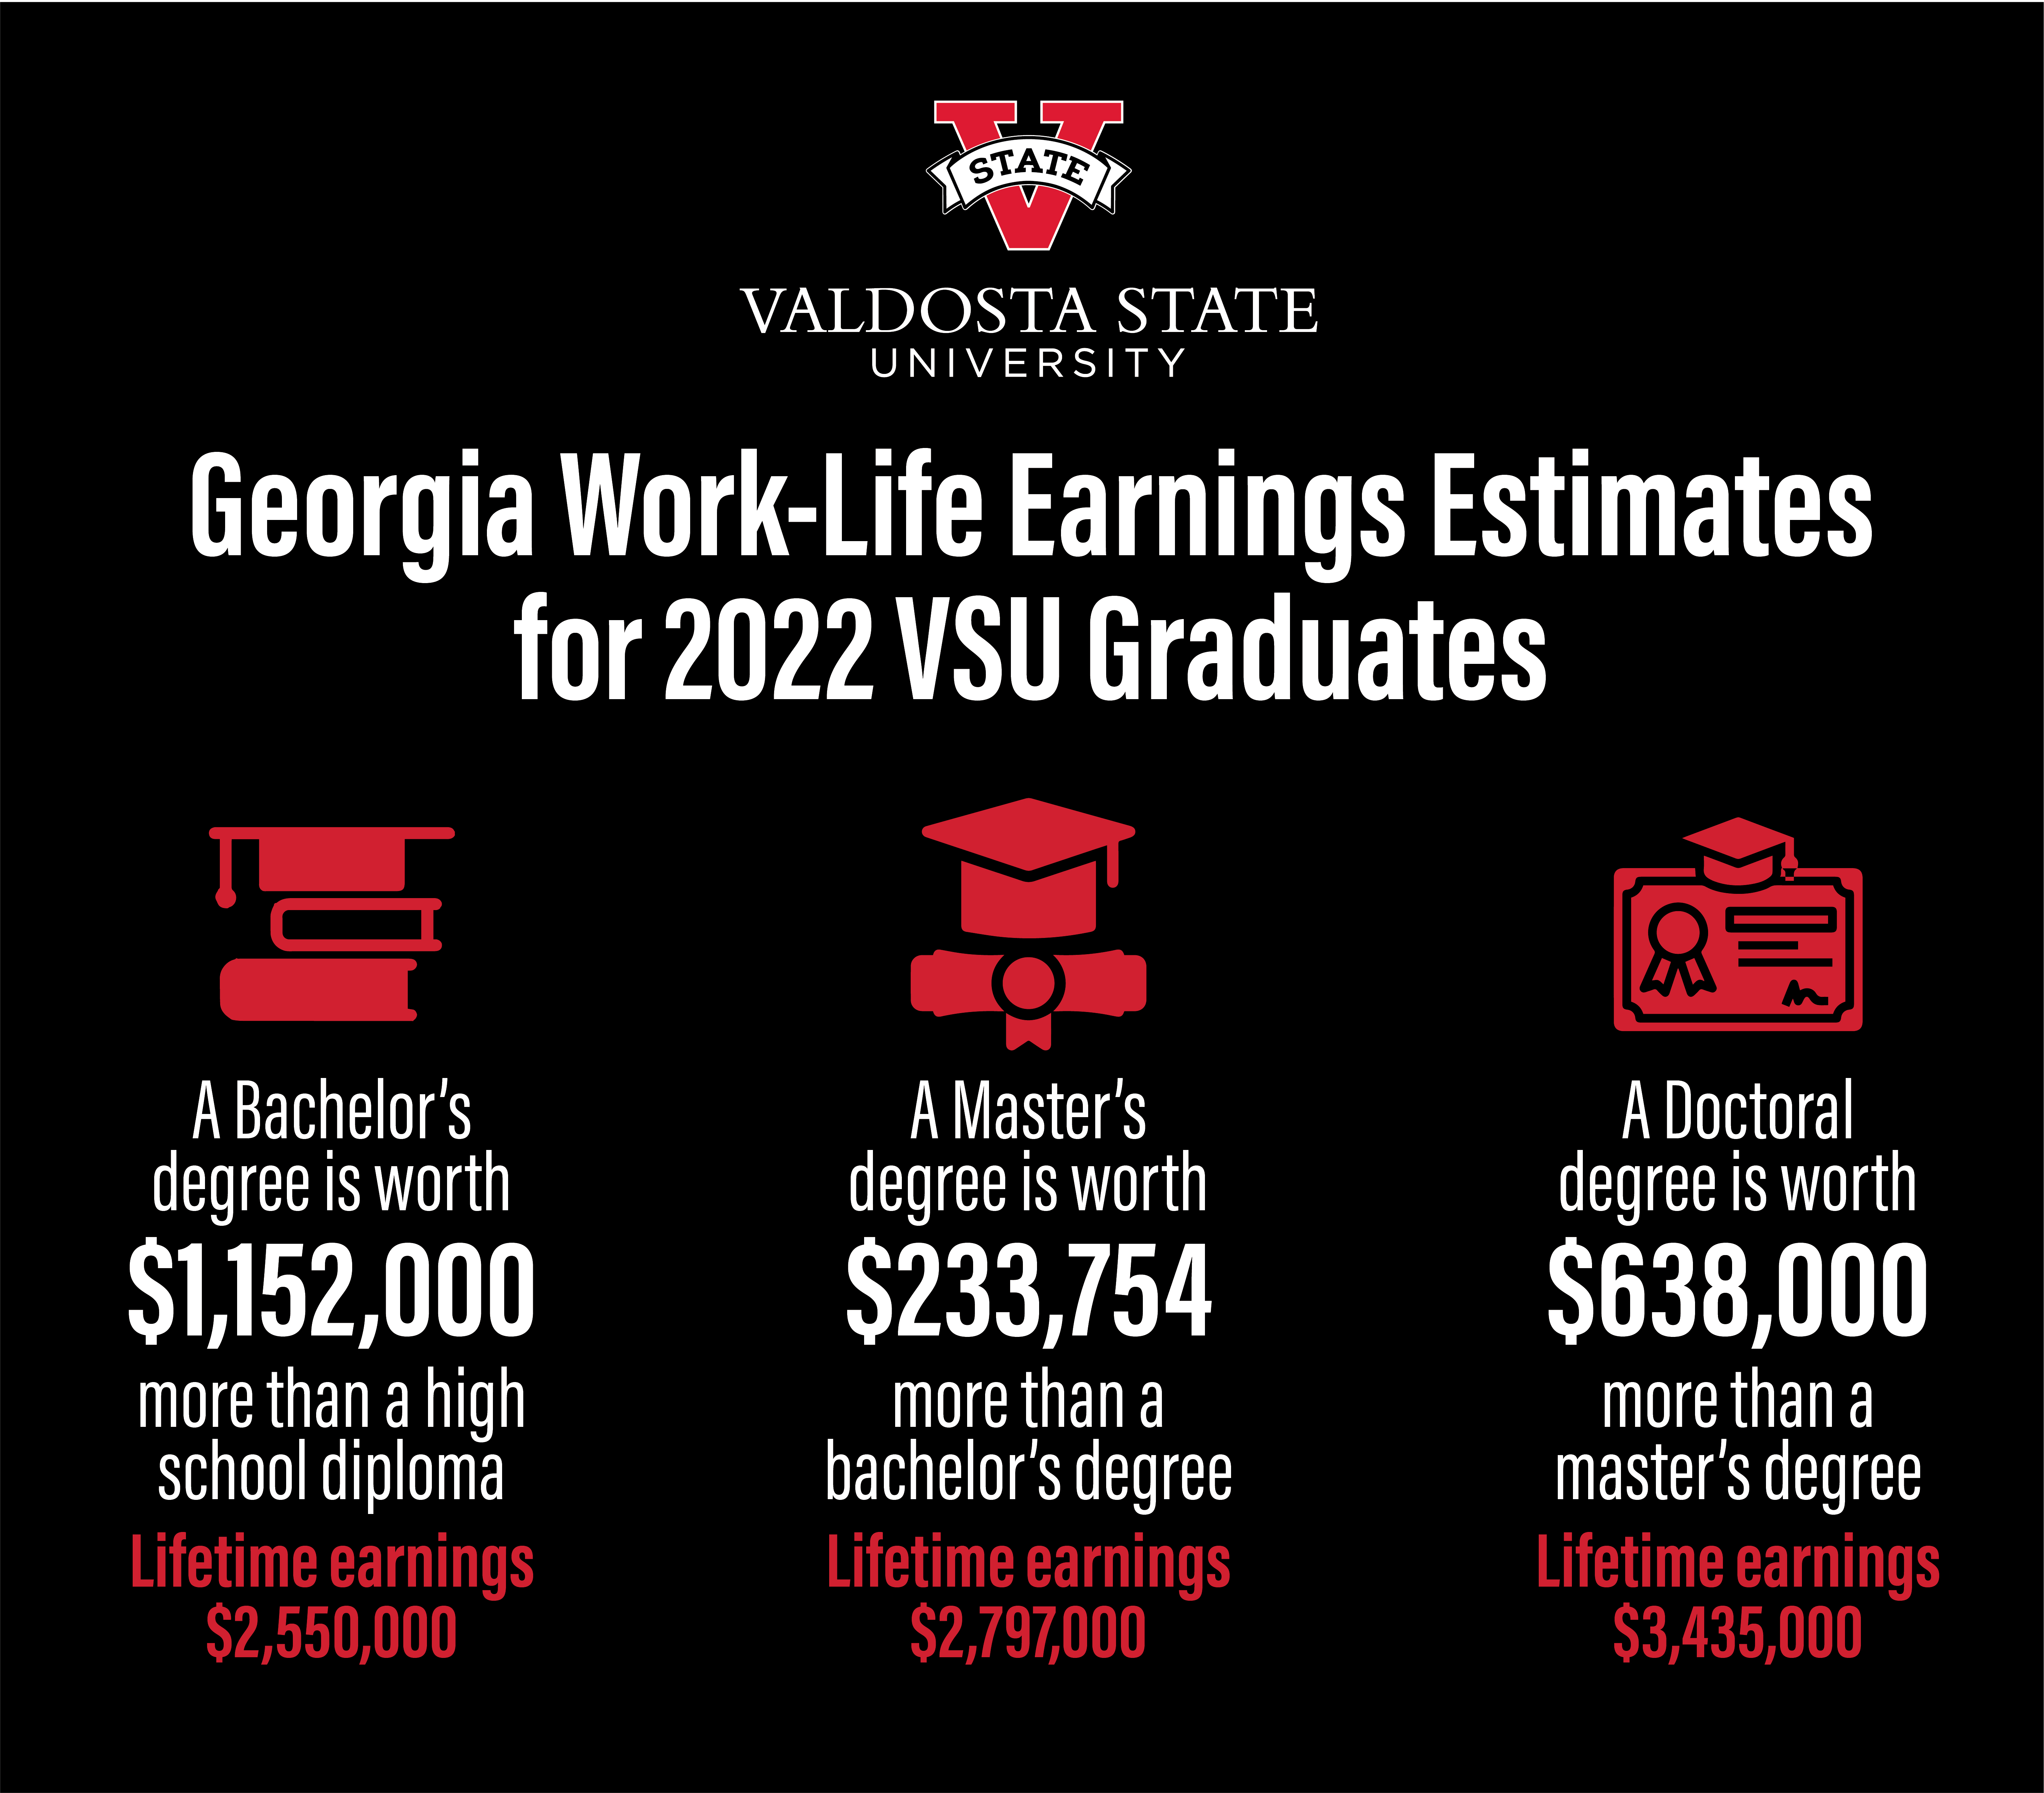 work-life-earning-estimates-01.jpg